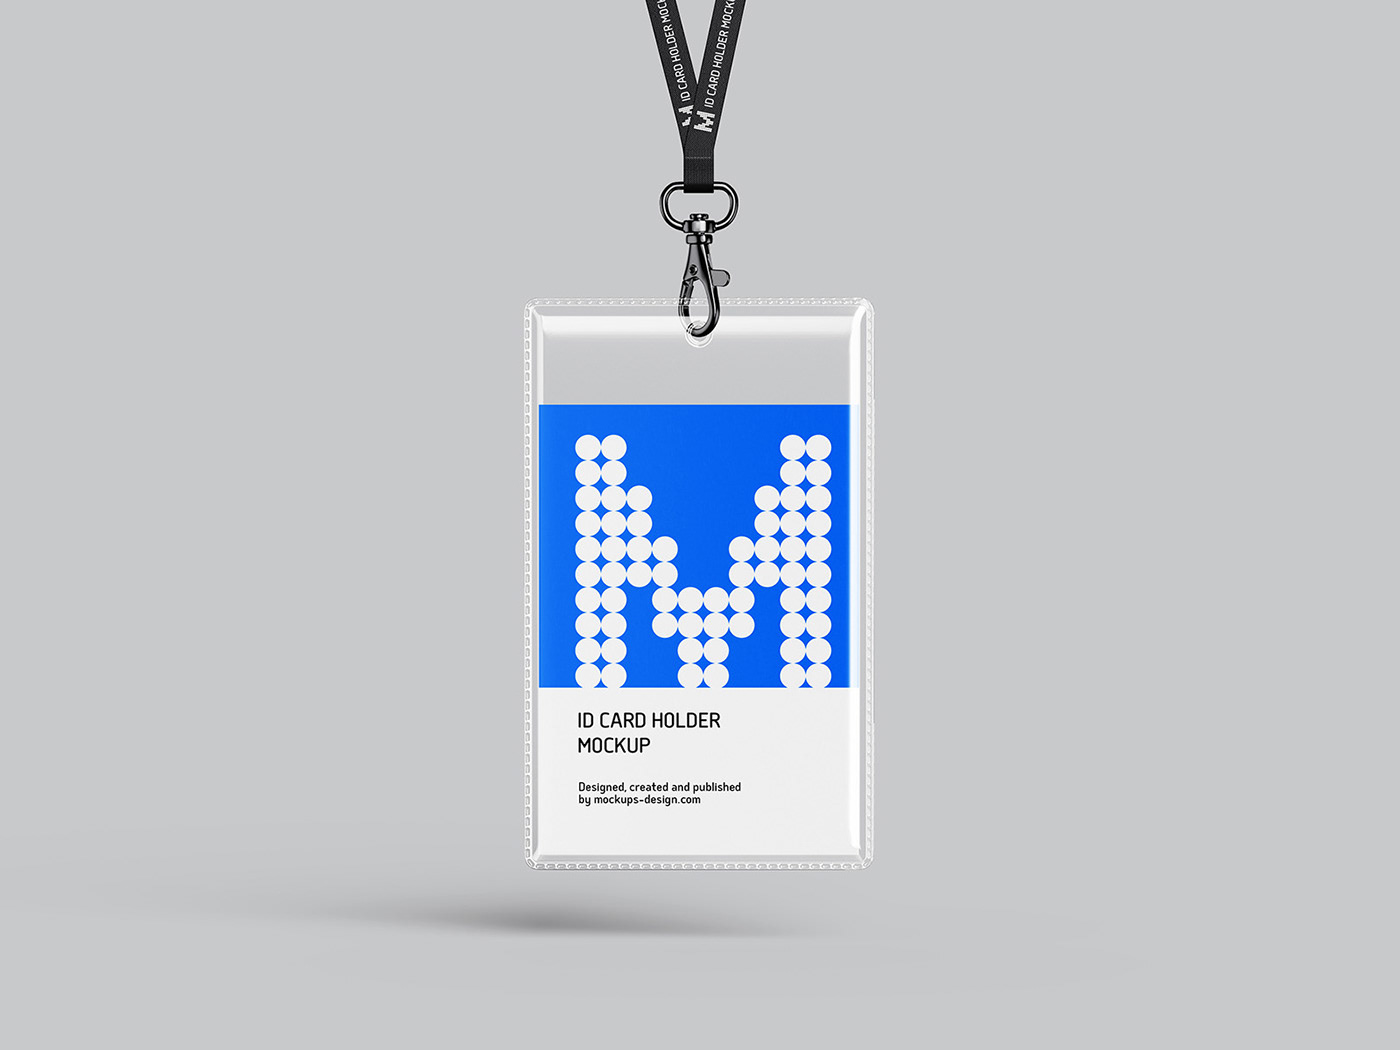 card Event Exhibition Design  free mockup  ID identity marketing   Mockup psd template